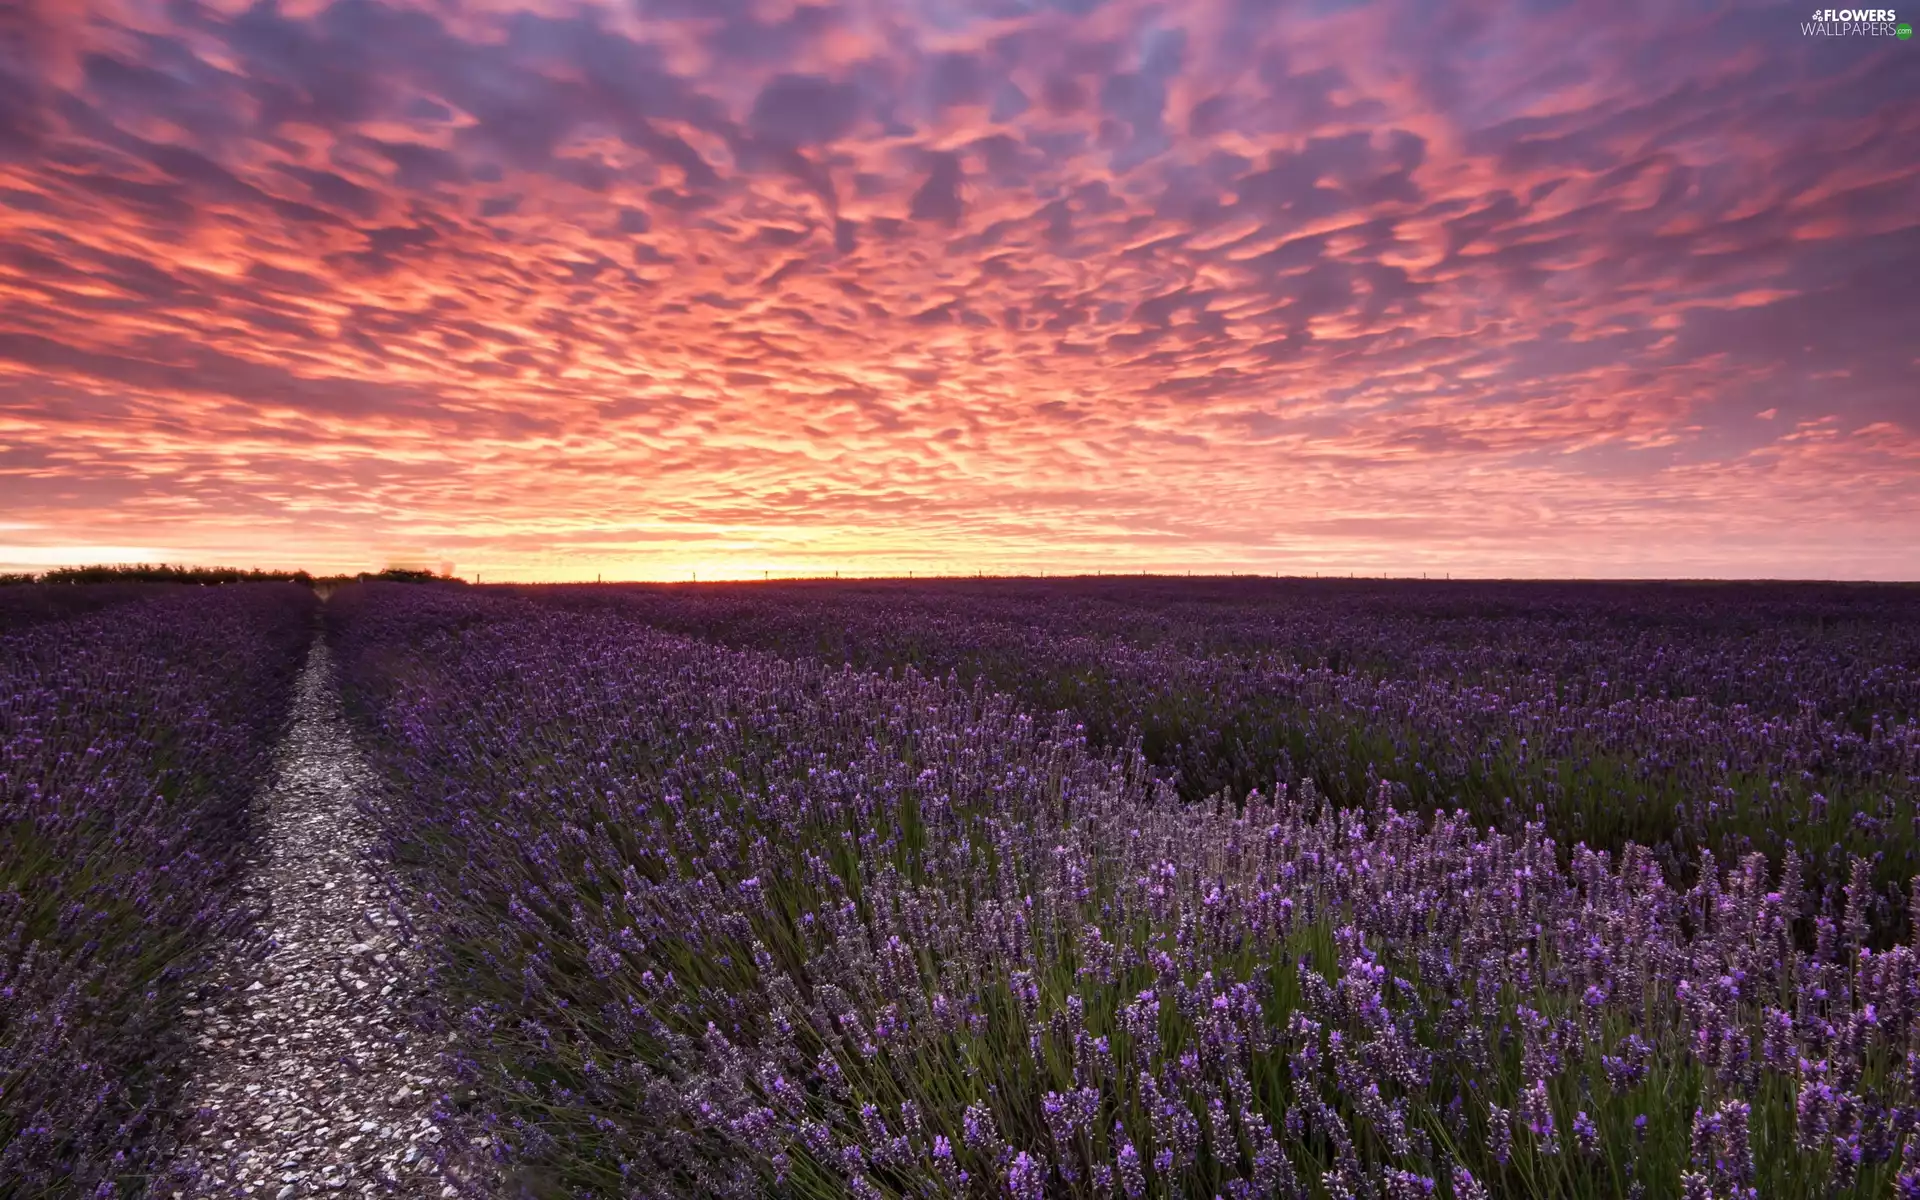 west, lavender, field, sun